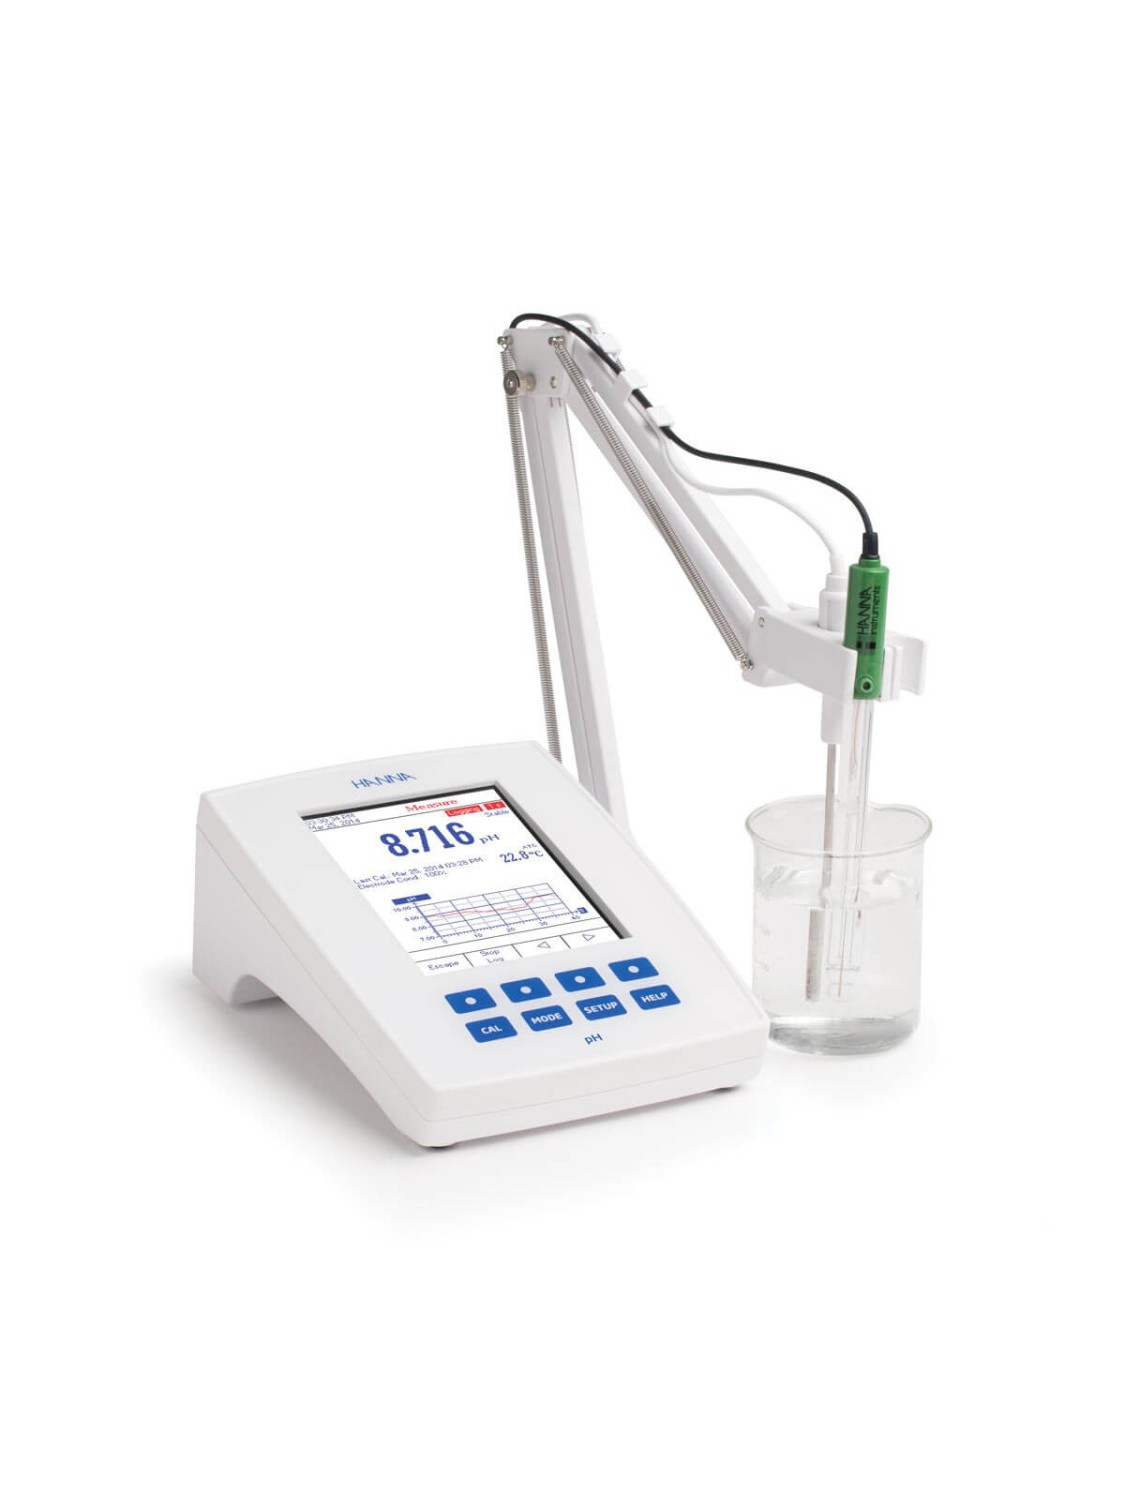 HI5221-01
Medidor de mesa de pH/mV grado investigación con resolución de 0.001 de pH